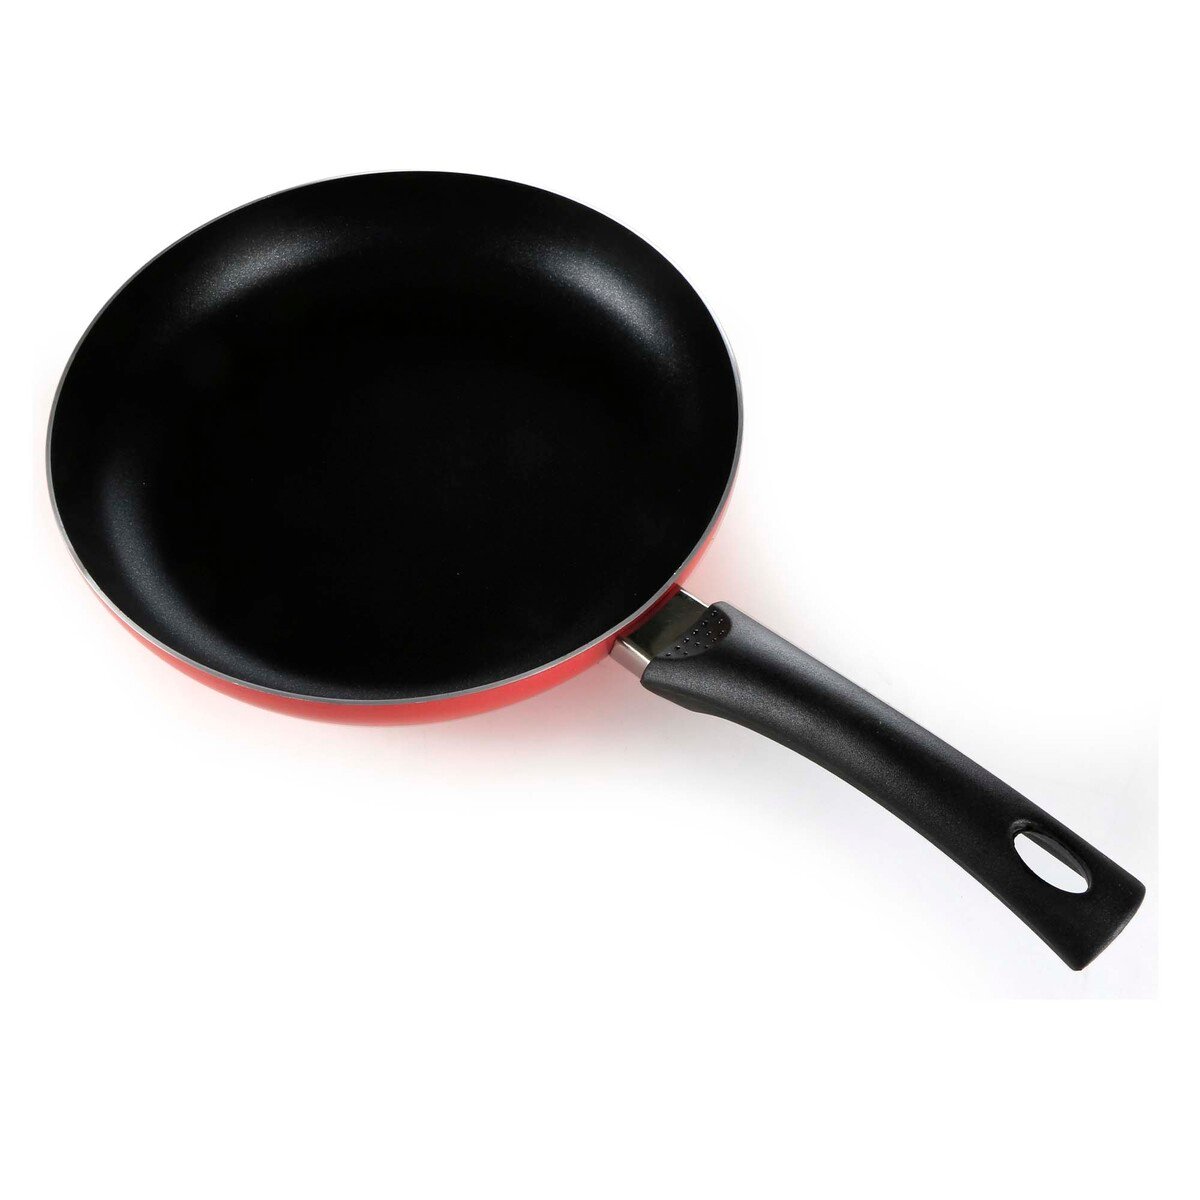 Chefline Non-Stick Fry Pan, 22 cm, ESNLINDFP22